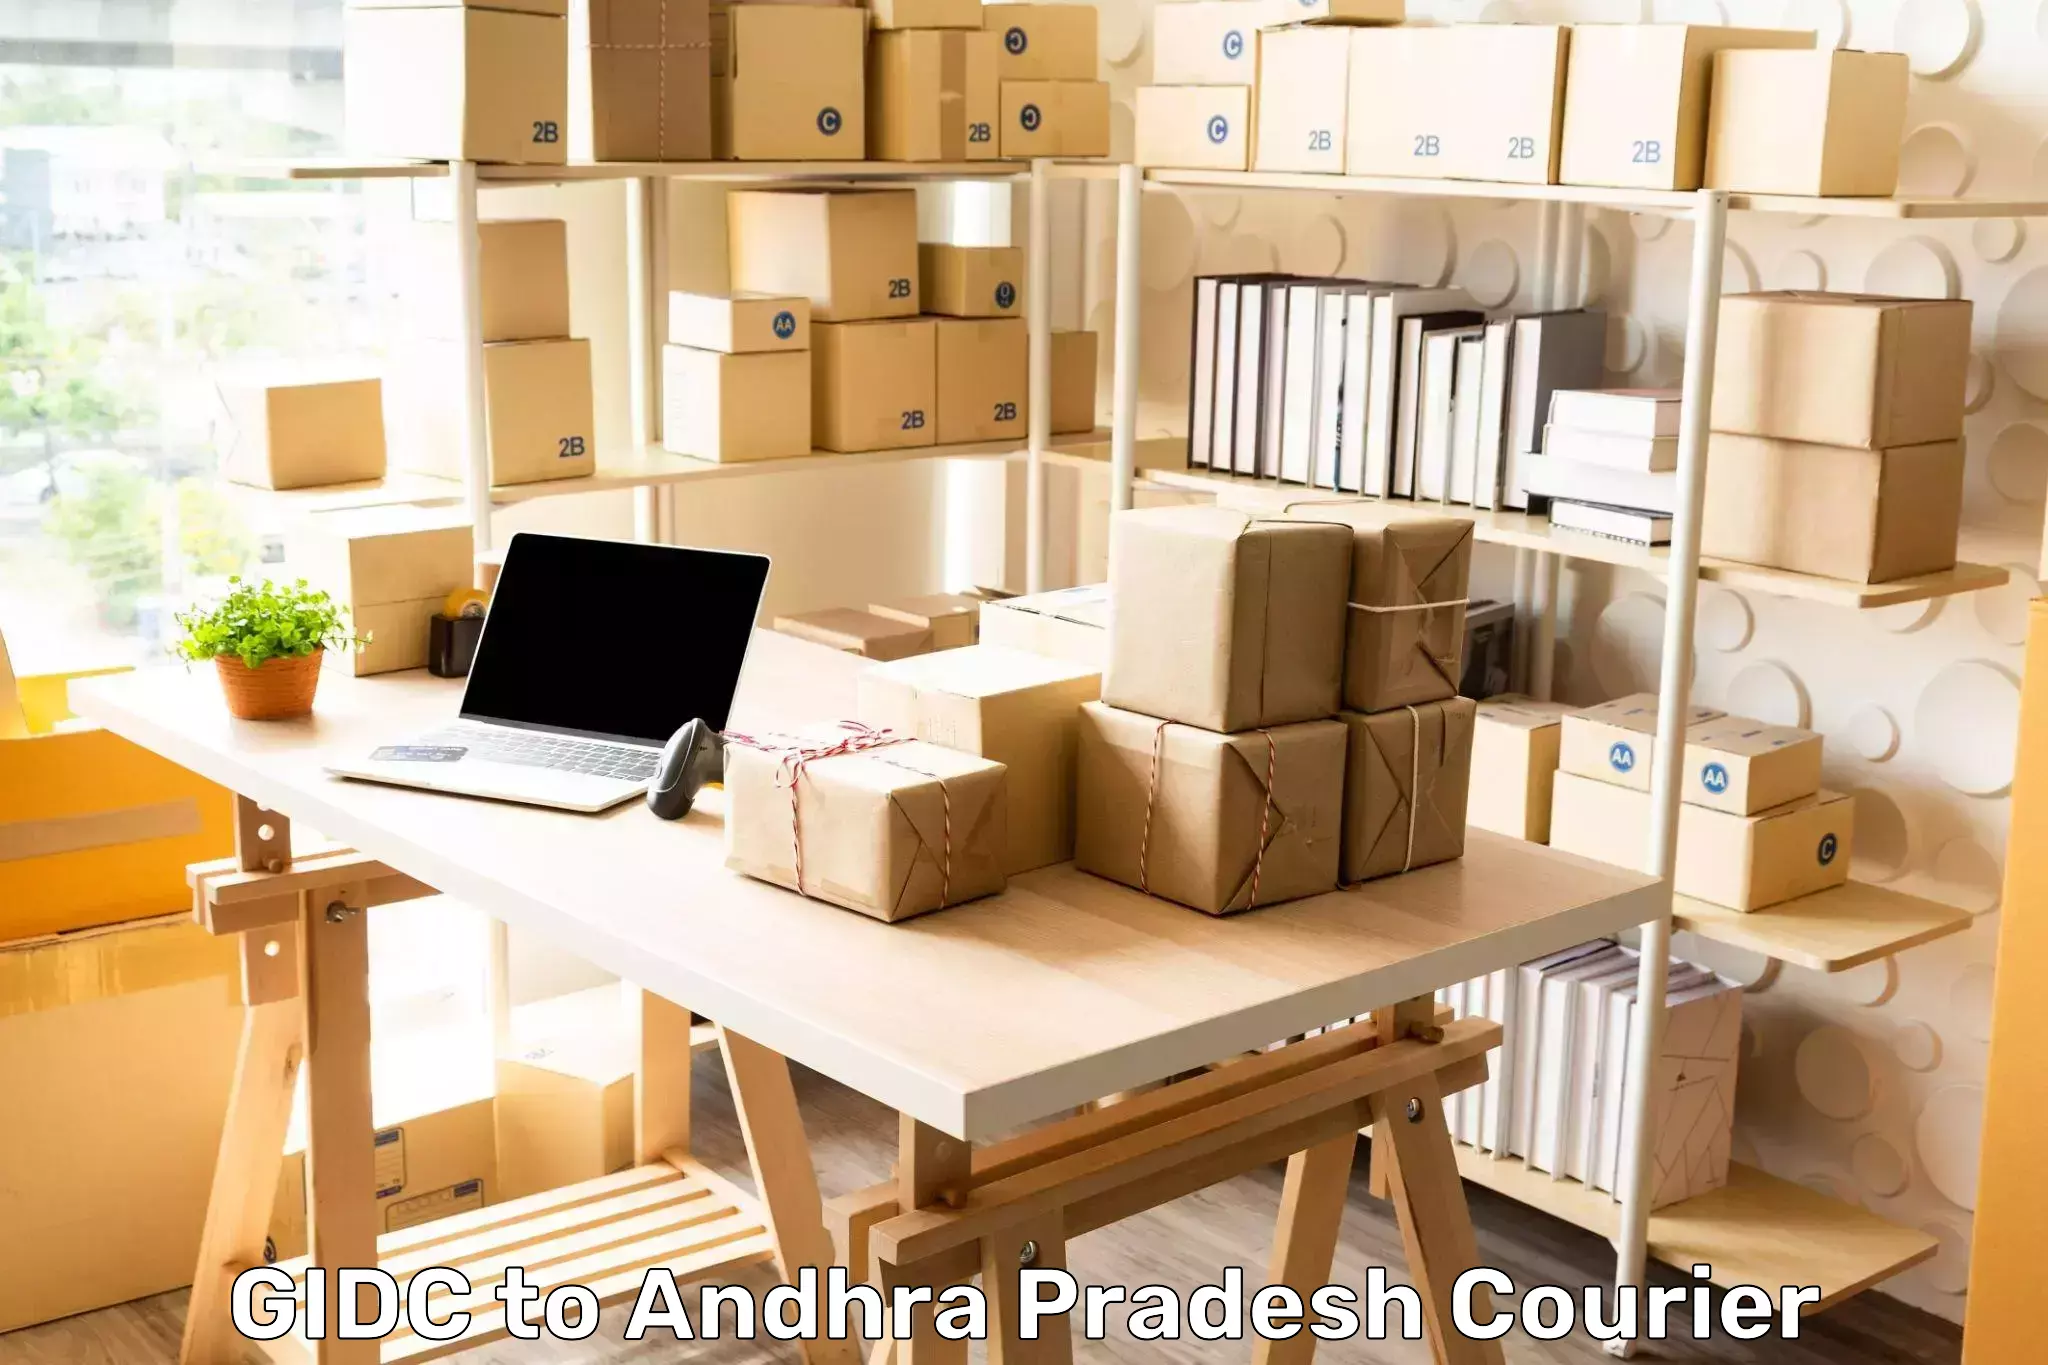 Advanced shipping technology GIDC to Andhra Pradesh